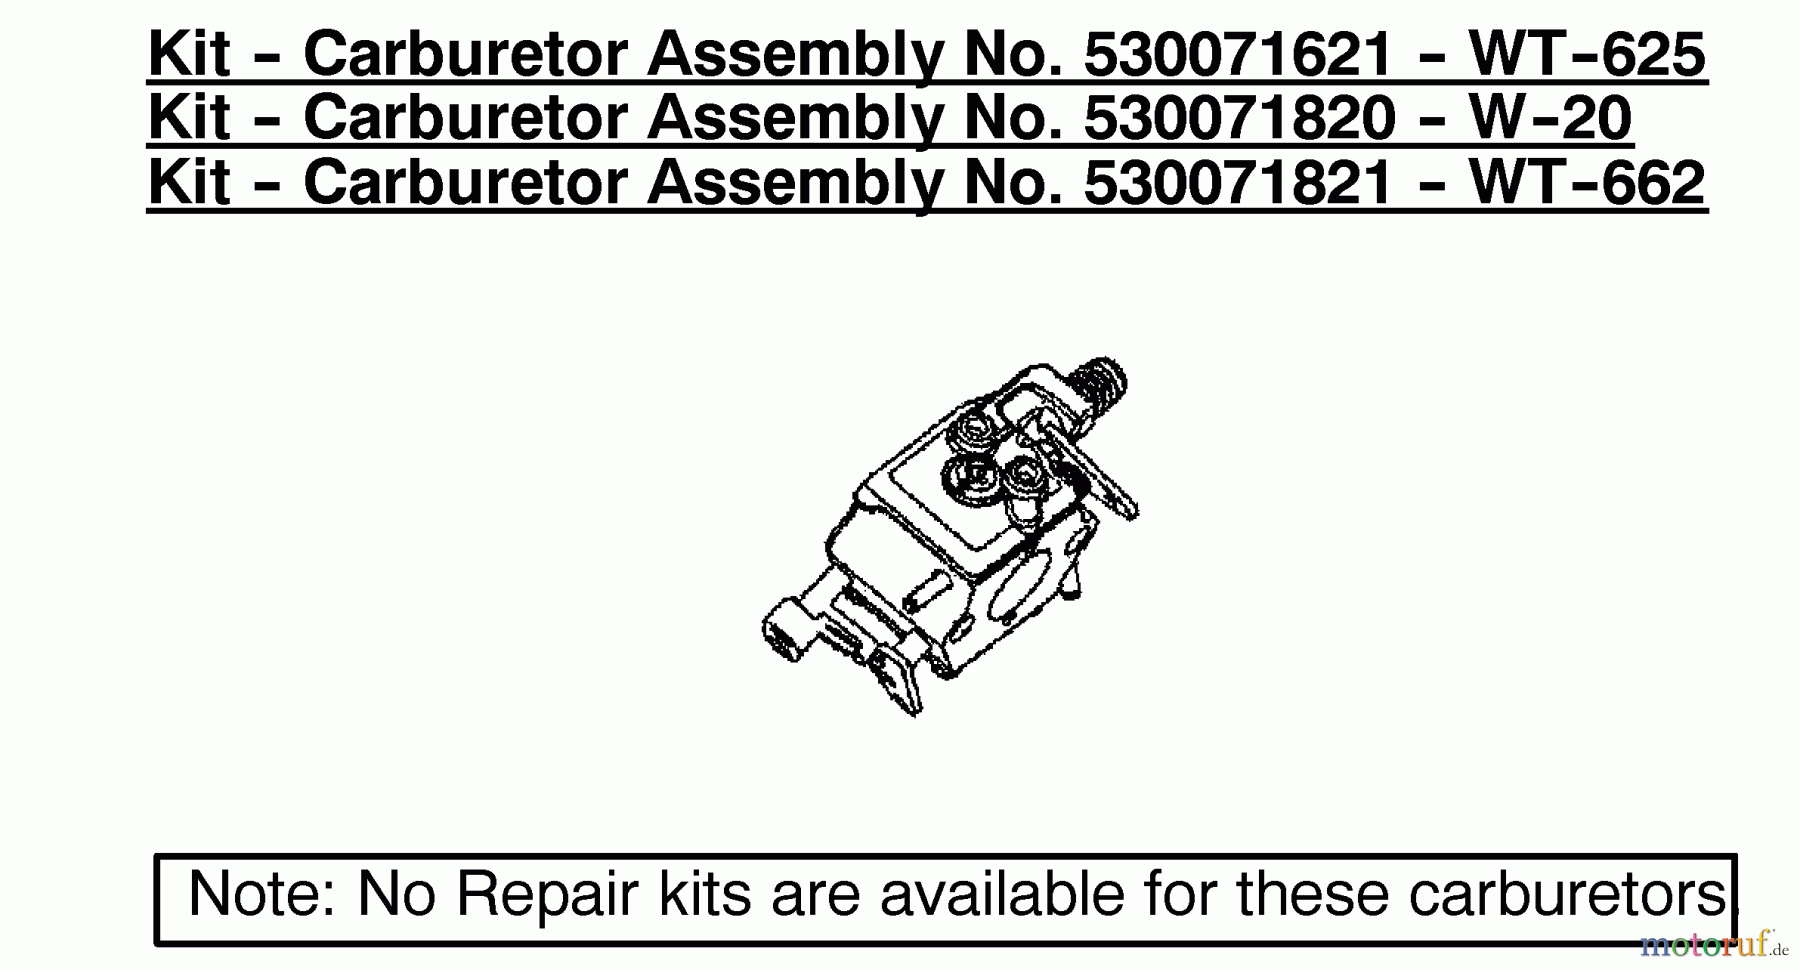  Poulan / Weed Eater Motorsägen 2550 (Type 1) - Poulan Woodmaster Chainsaw Kit - Carburetor Assembly 530071621/530071820/530071821